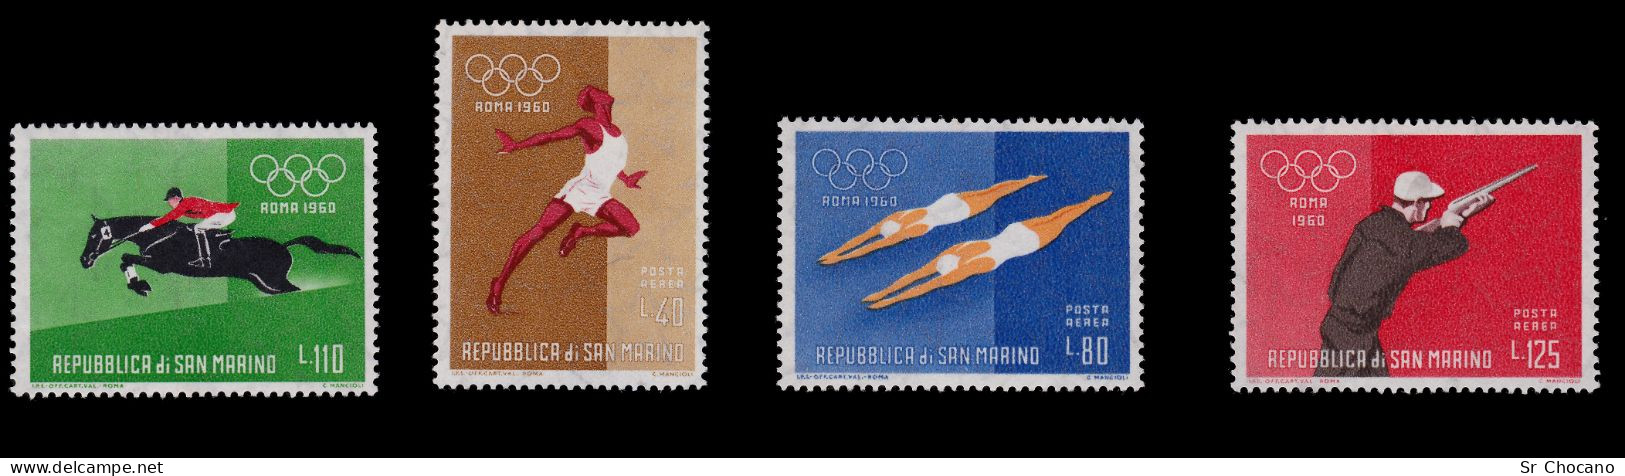 SAN MARINO STAMPS.1960.17th Olympic Games Rome.SCOTT 456-465,C111-C114.MNH. - Nuevos